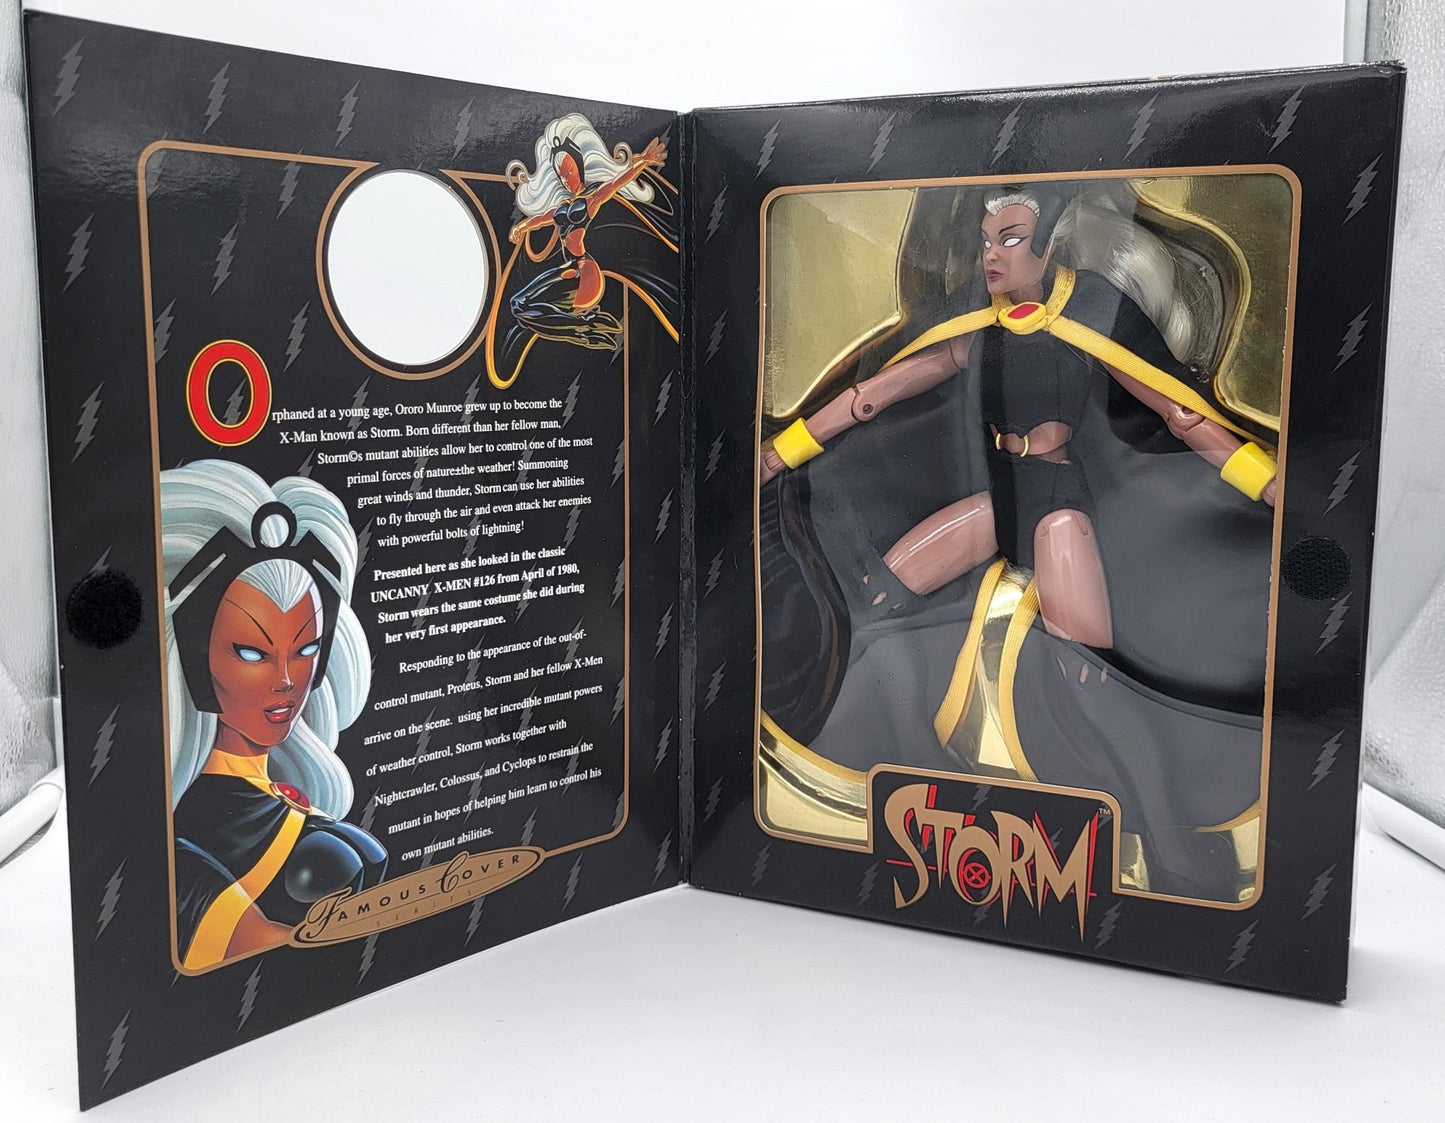 Toy Biz - Toy Biz | Marvel Famous Cover Series - Storm 1997 | Posable Figure | Limited Vintage Action Figure - Action Figures - Steady Bunny Shop